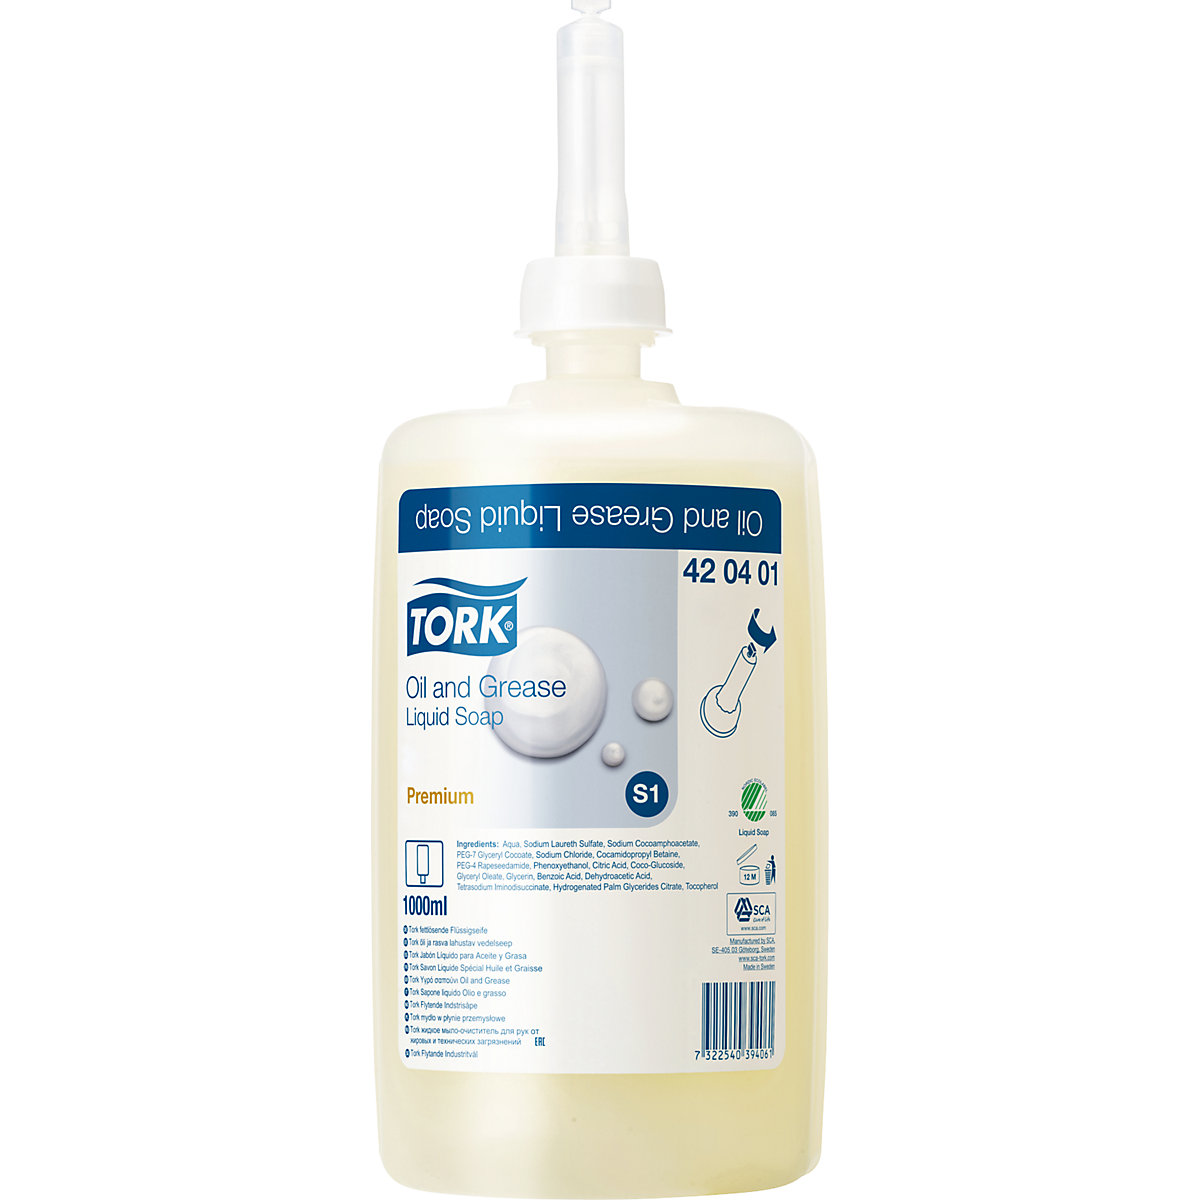 Vetoplossende vloeibare zeep, premium kwaliteit – TORK